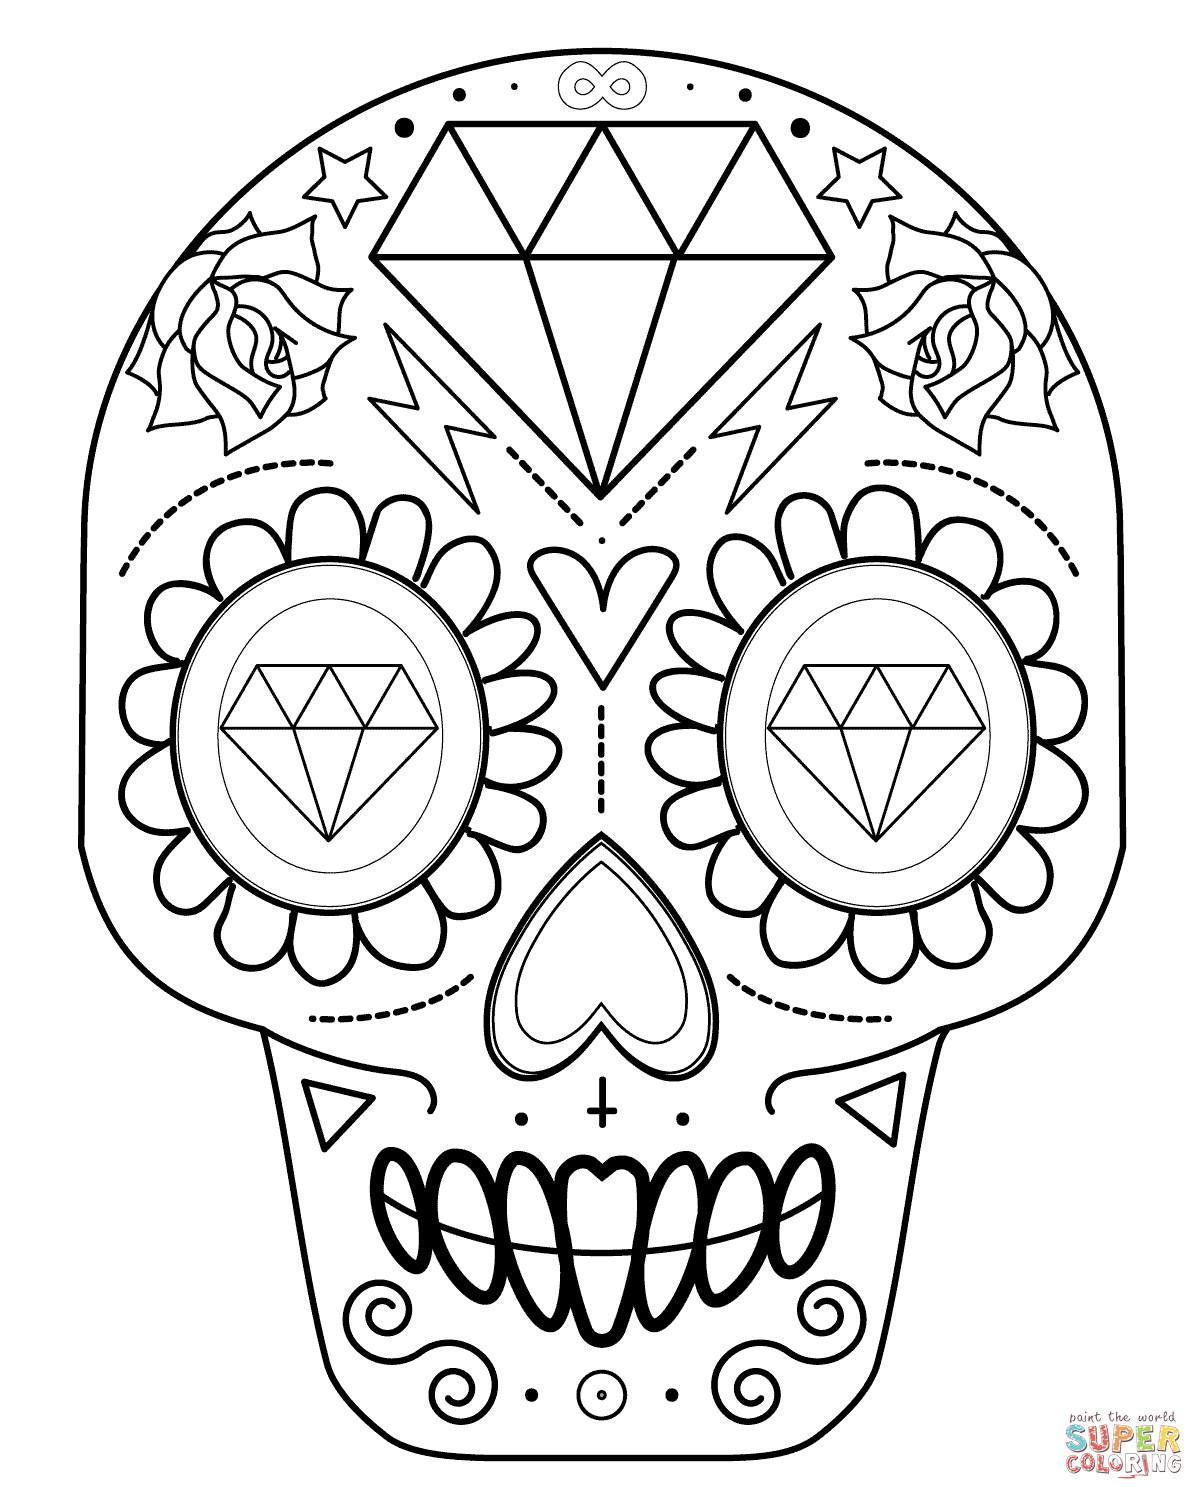 Sugar Skulls Coloring Pages
 Sugar Skull with Diamonds coloring page